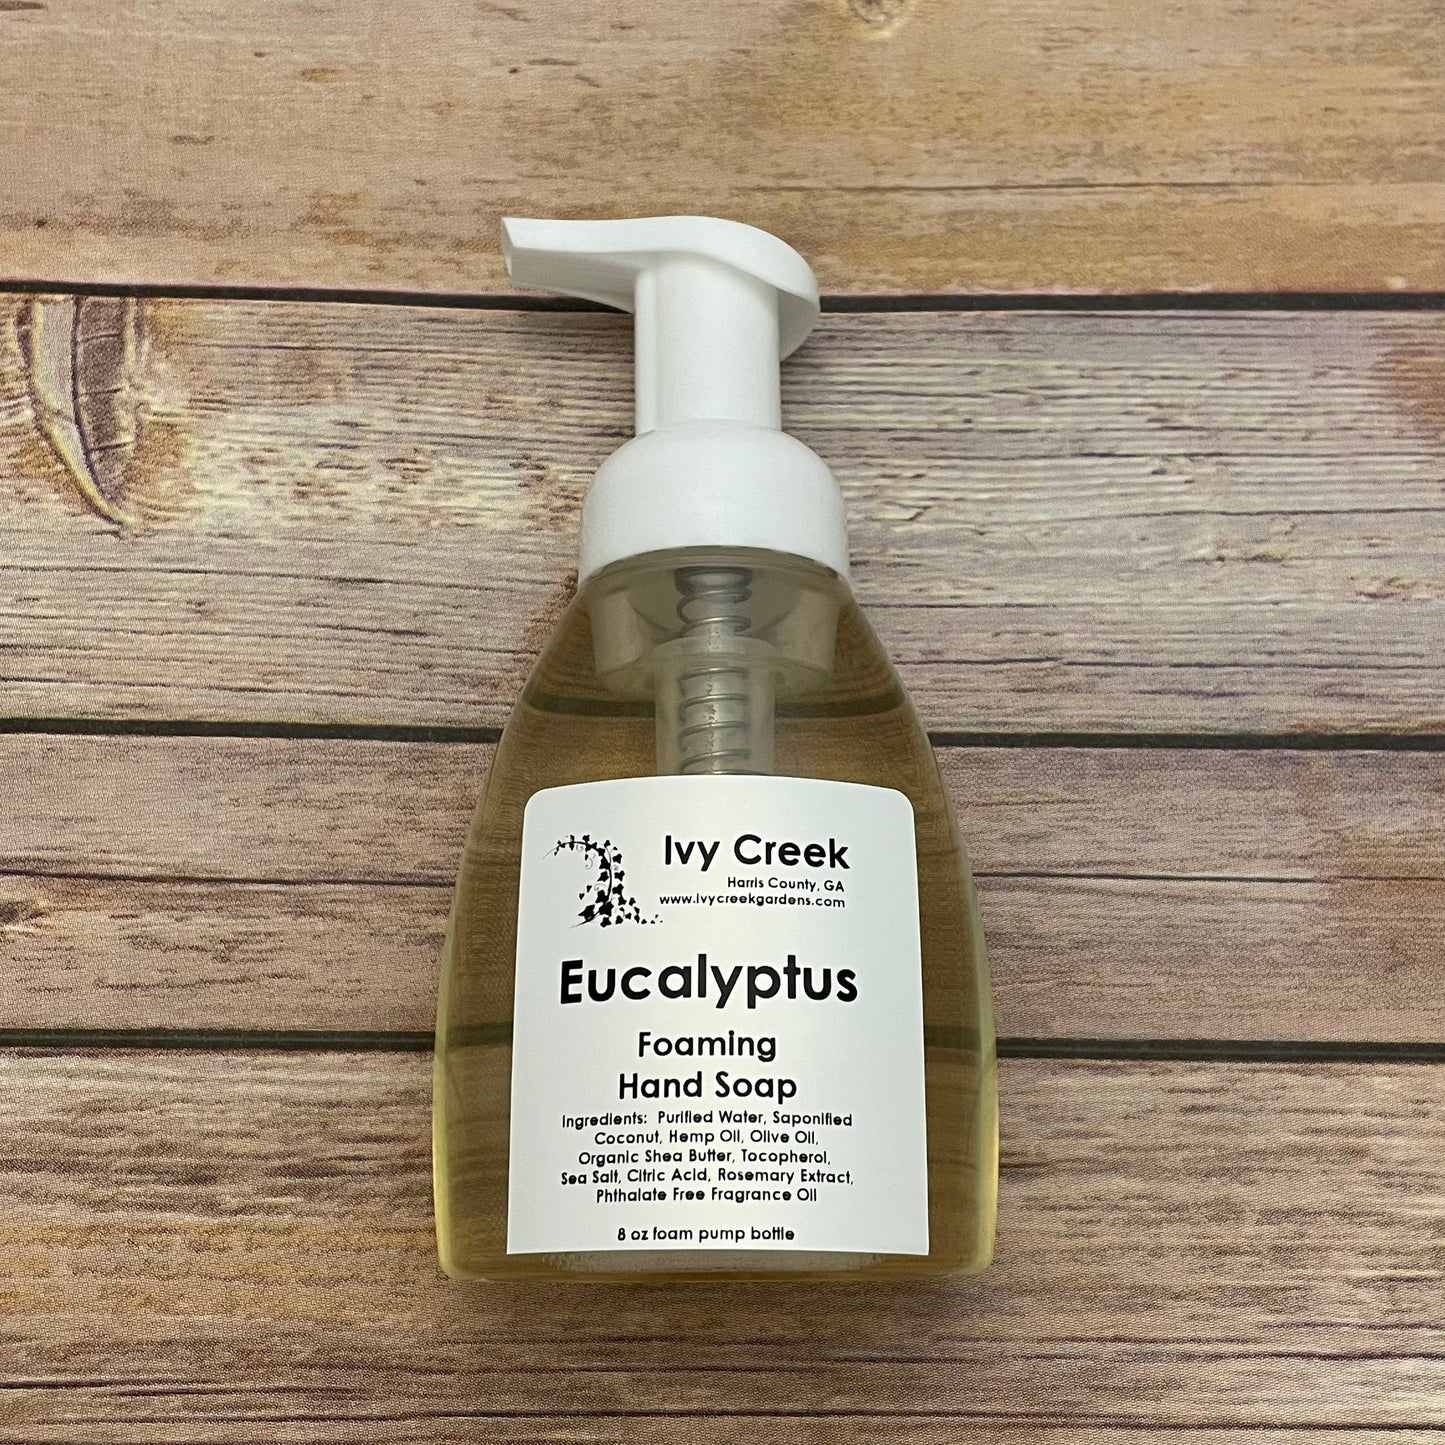 Ivy Creek Eucalyptus Foaming Hand Soap - Natural Moisturizing Hand Soap - 8 oz